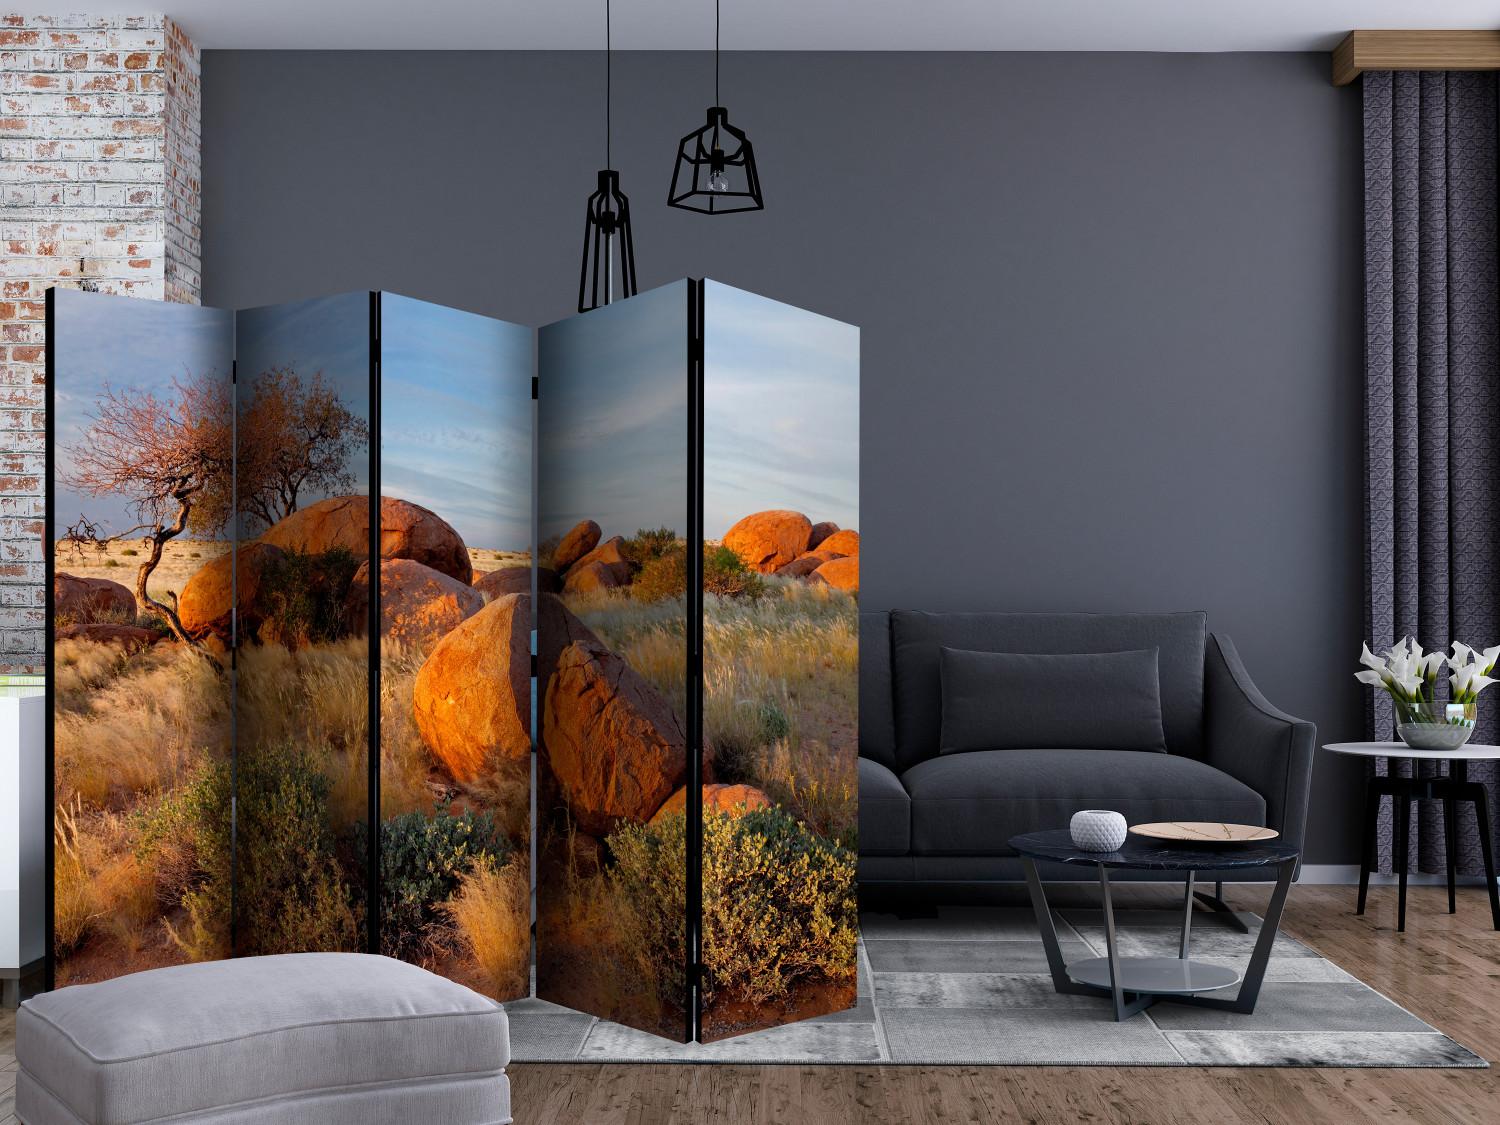 Room Divider African Landscape (5-piece) - desert landscape of trees and stones